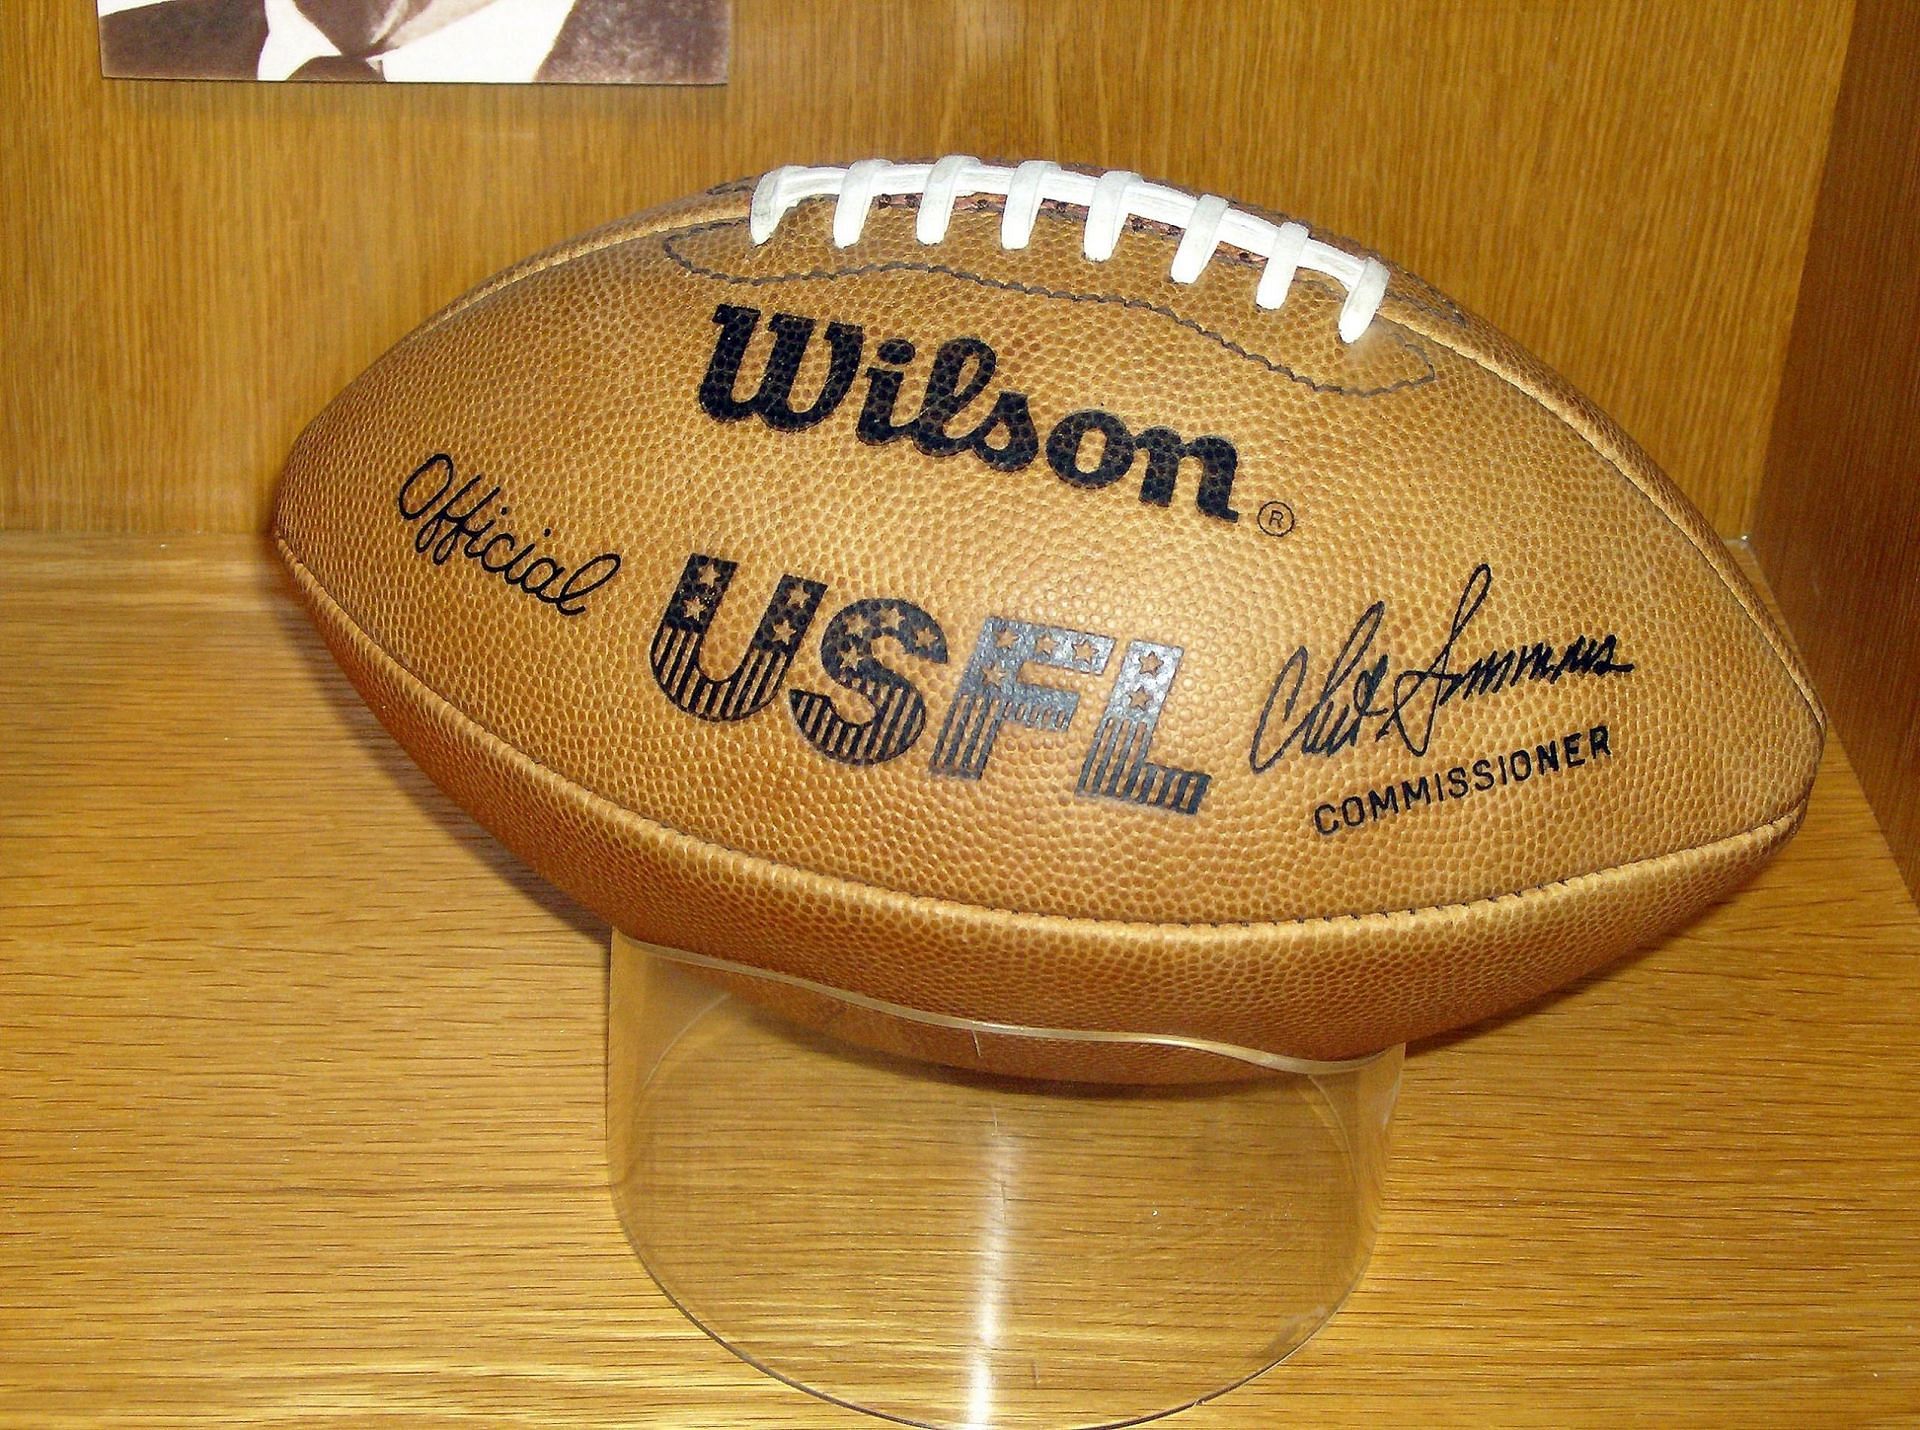 USFL Official Football (Courtesy: Wikimedia Commons)